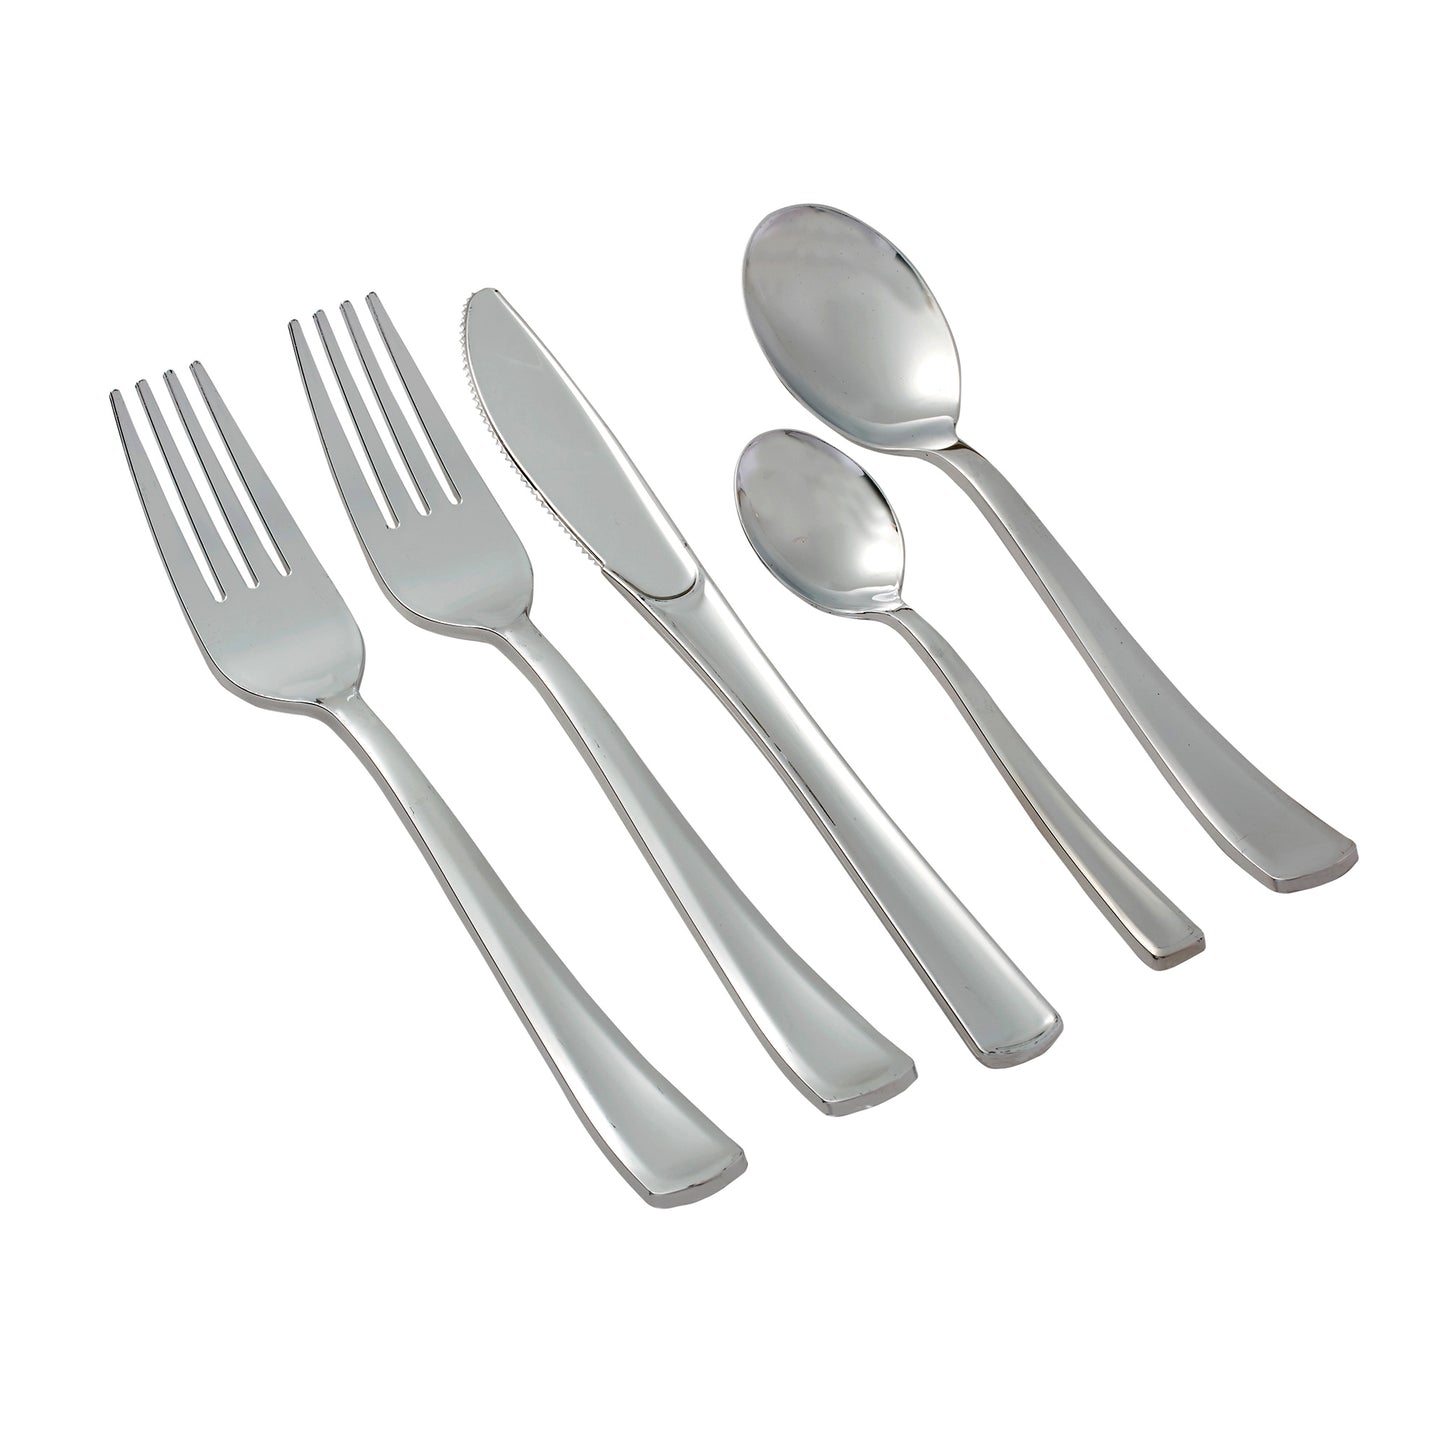 330 -Piece white square dinnerware set for 40 guests Includes: 80 white square plastic plates & 250 silver-colored silverware utensils